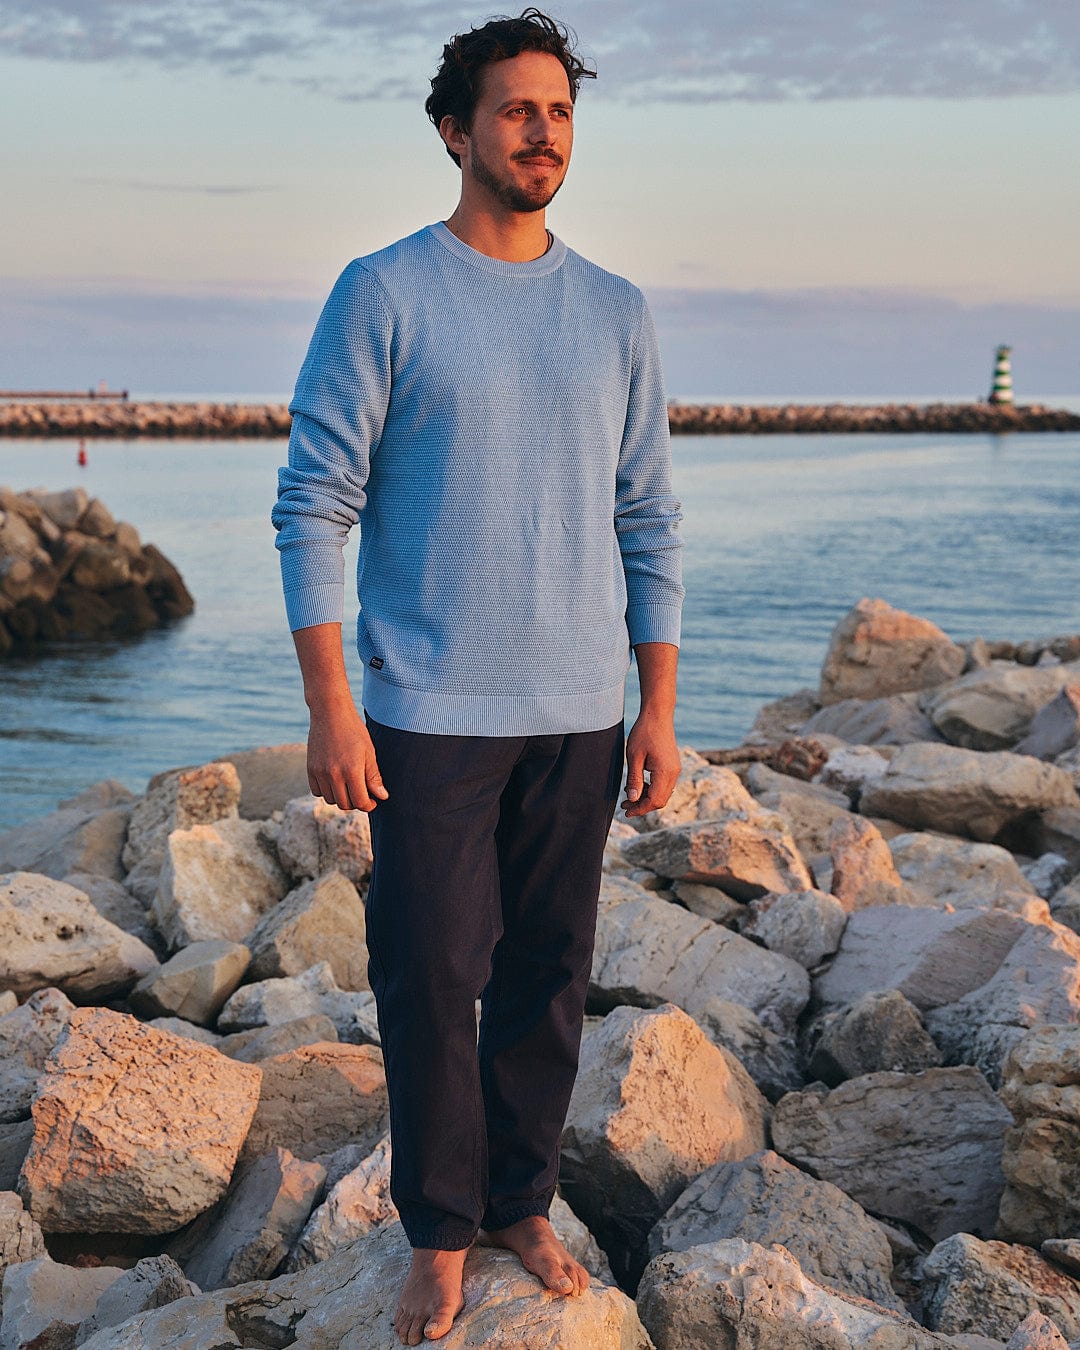 An outdoor adventurer standing on rocks next to the ocean wearing a blue sweater and Saltrock Meddon - Mens Twill Trouser - Navy.